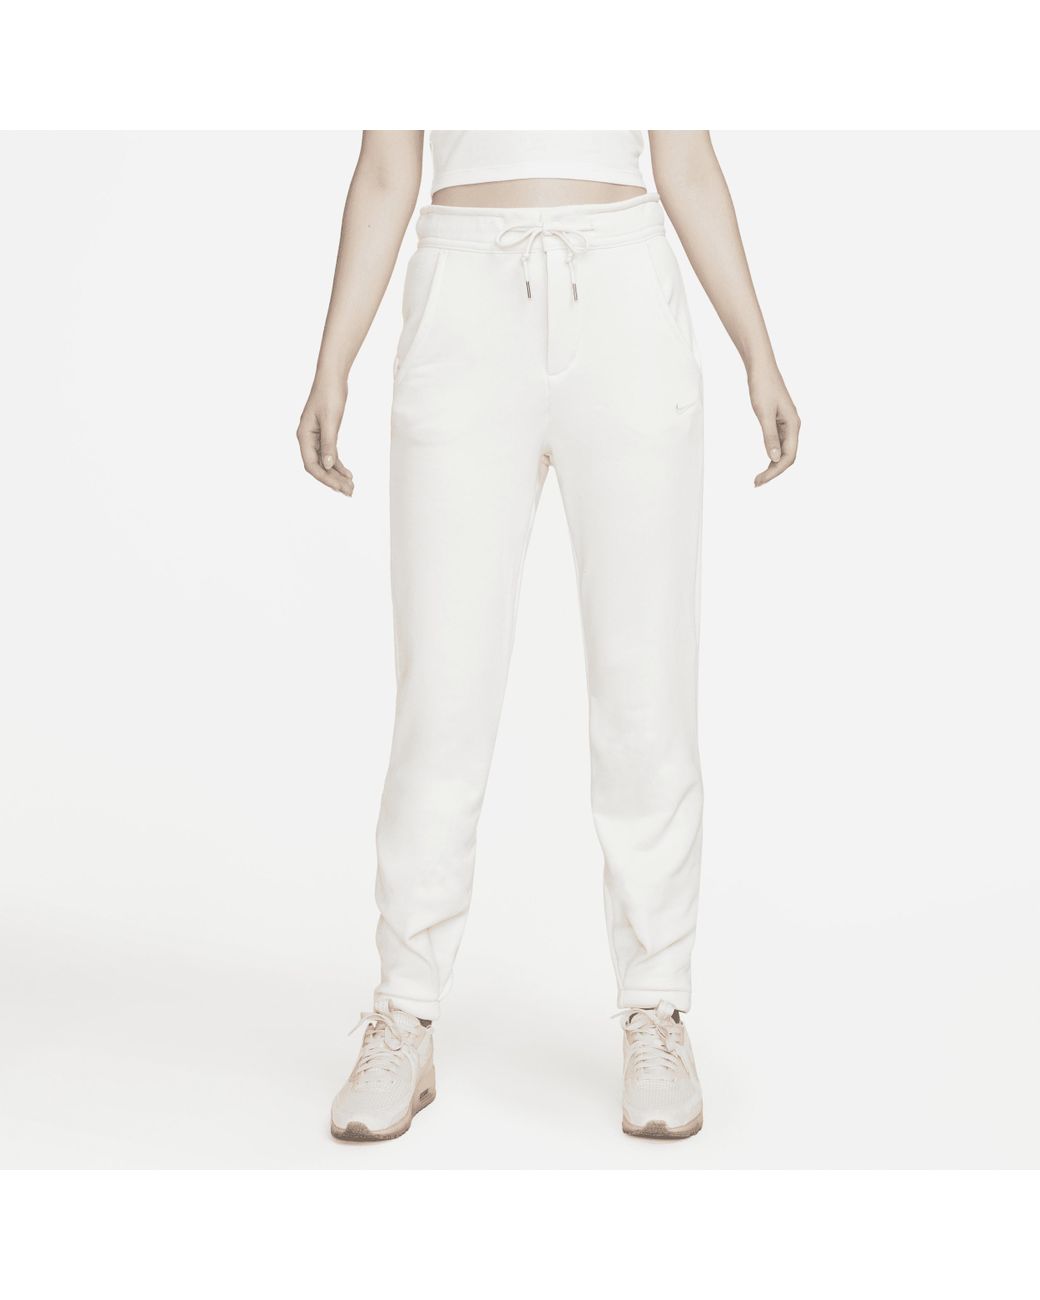 Nike Sportswear Modern Fleece Broek Van Sweatstof Met Hoge Taille in het  Wit | Lyst NL